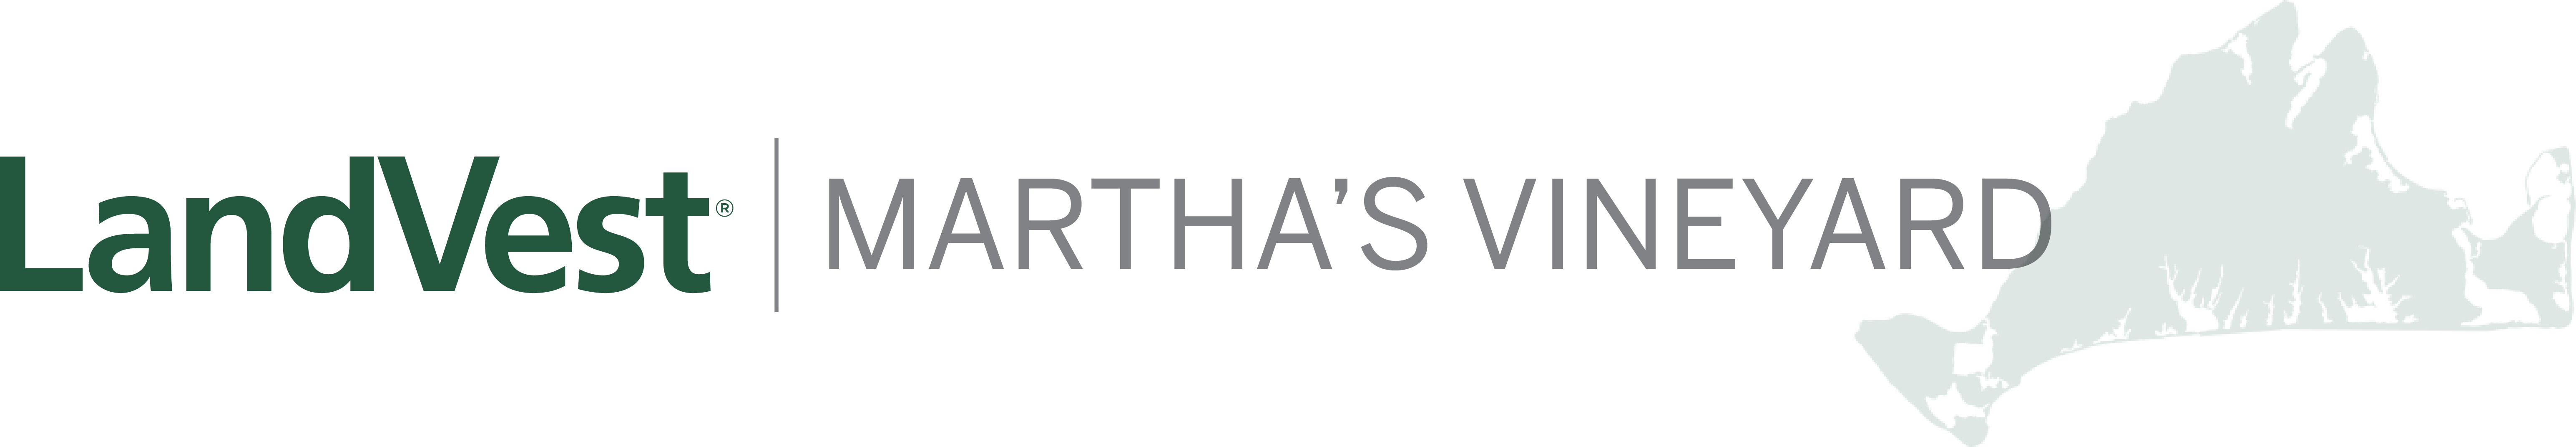 Martha's Vineyard real estate